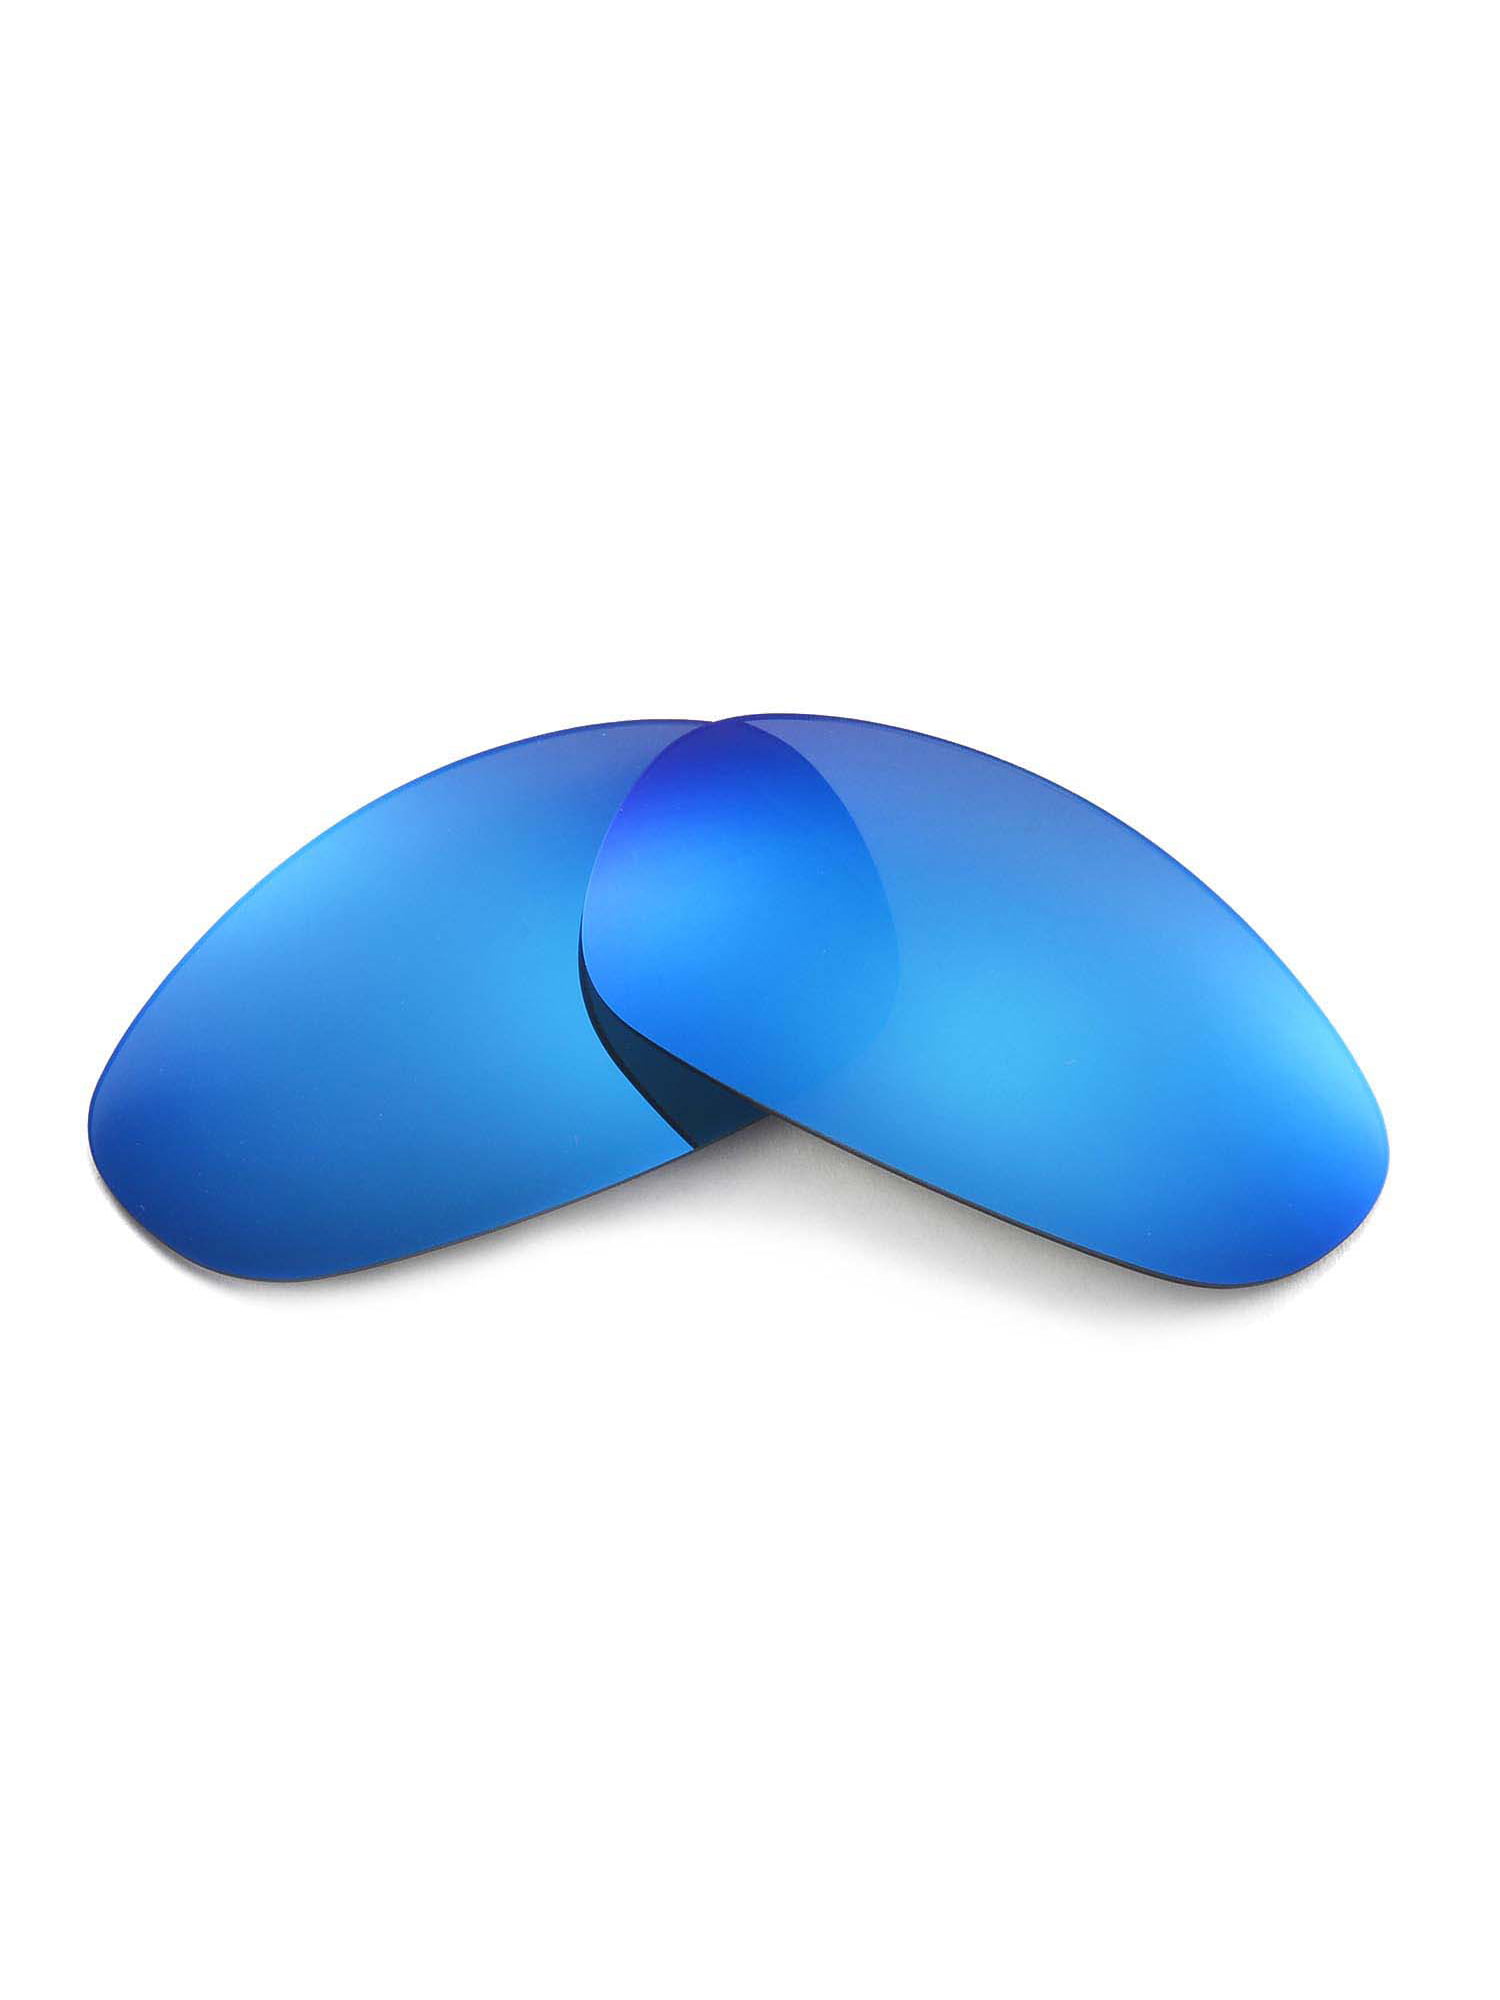  LINEGEAR HD lens for Oakley Juliet -  Non-polarized/Polycarbonate (HD-Turquoise Blue) : ביגוד, נעליים ותכשיטים